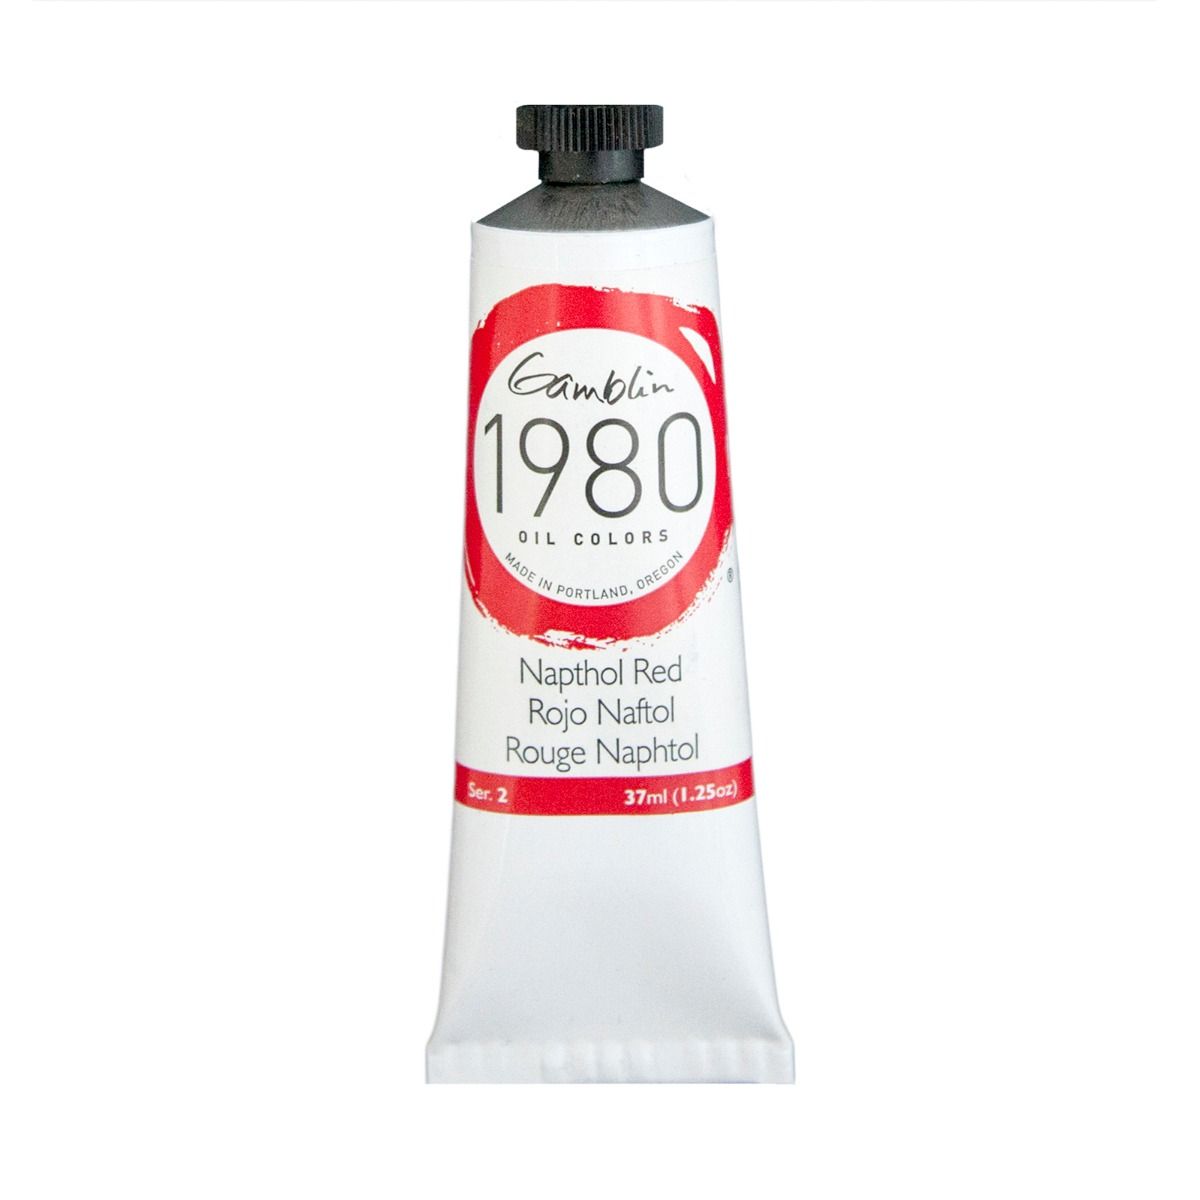 Gamblin 1980 Oils - Napthol Red, 37 ml (1.25oz)